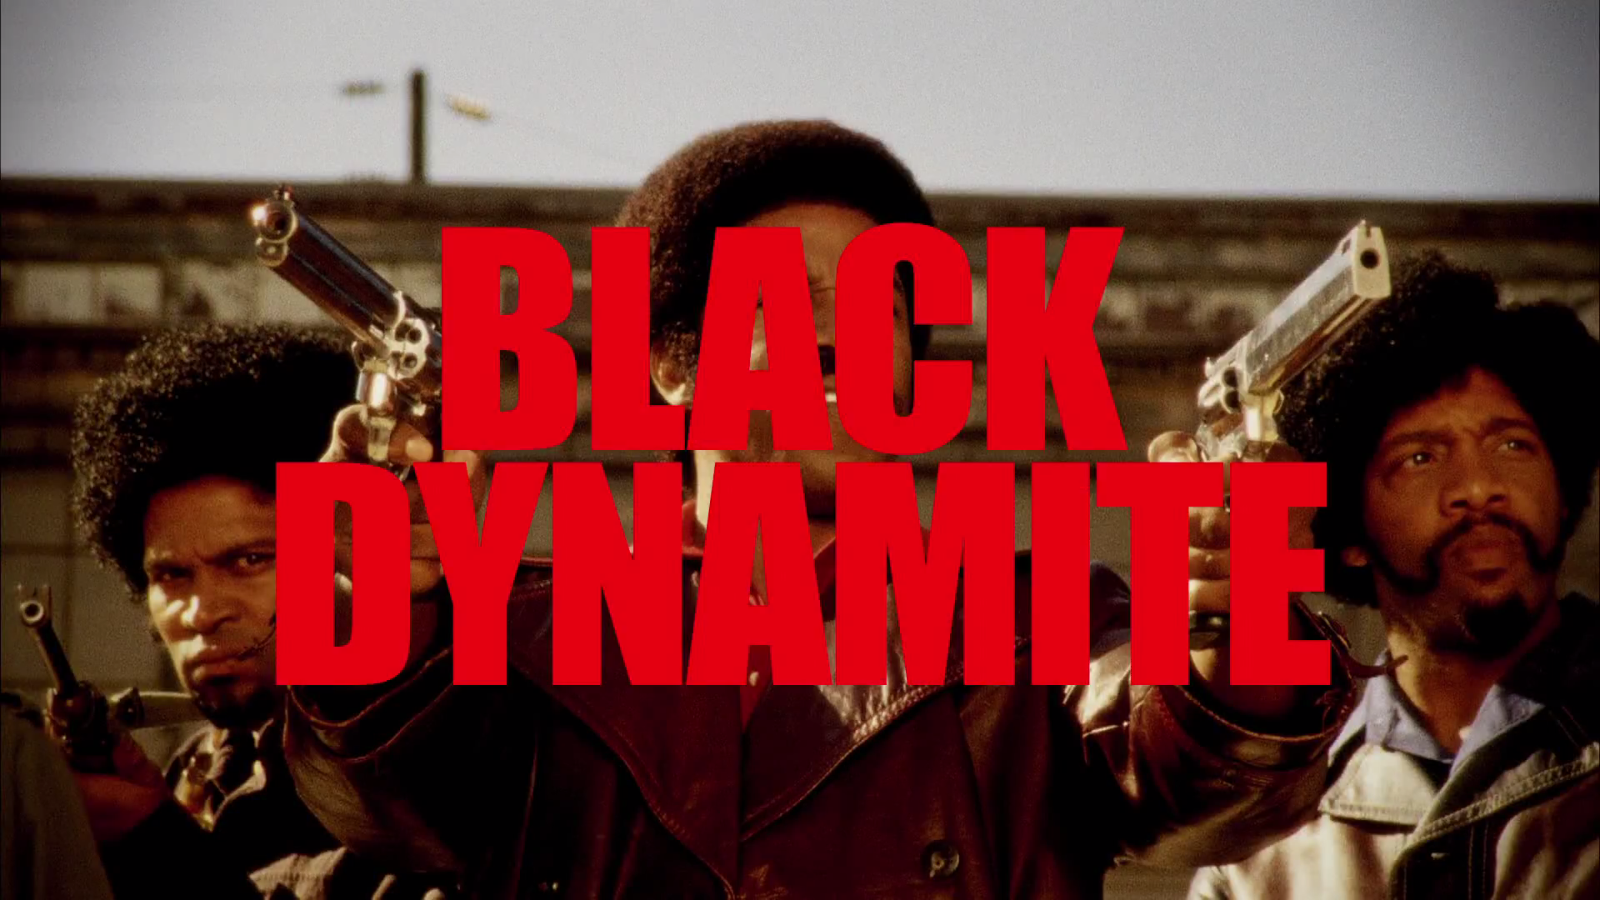 Black Pornstar Dynamite